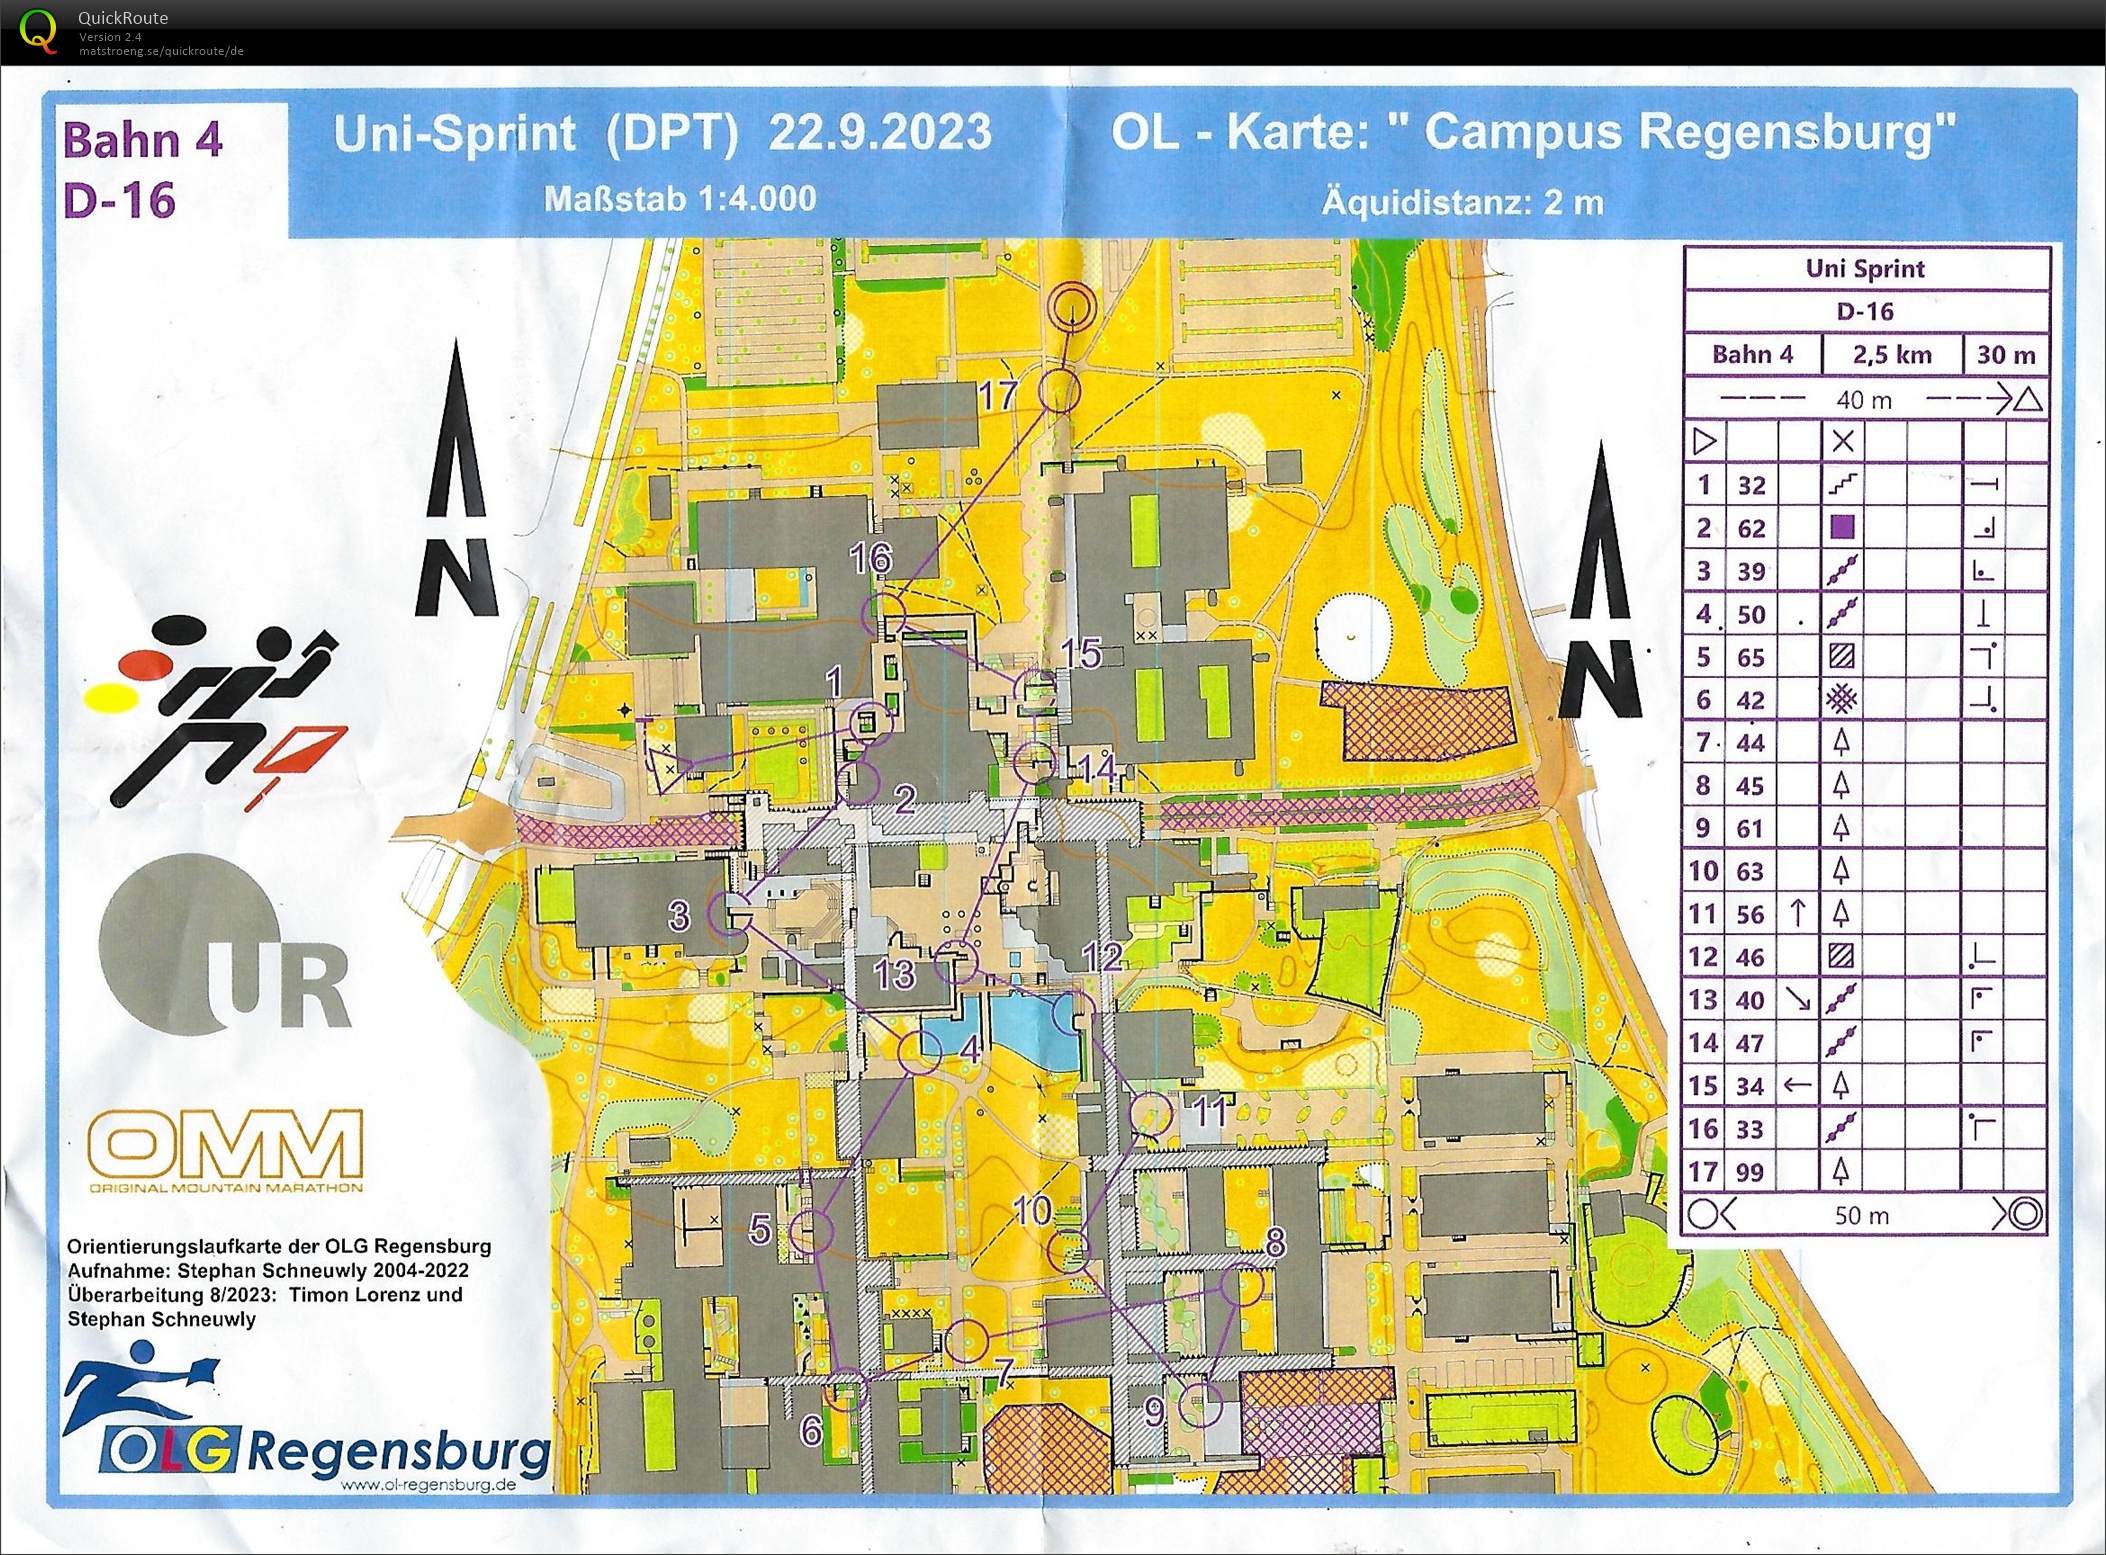 DPT-Sprint Uni Regensburg (22/09/2023)